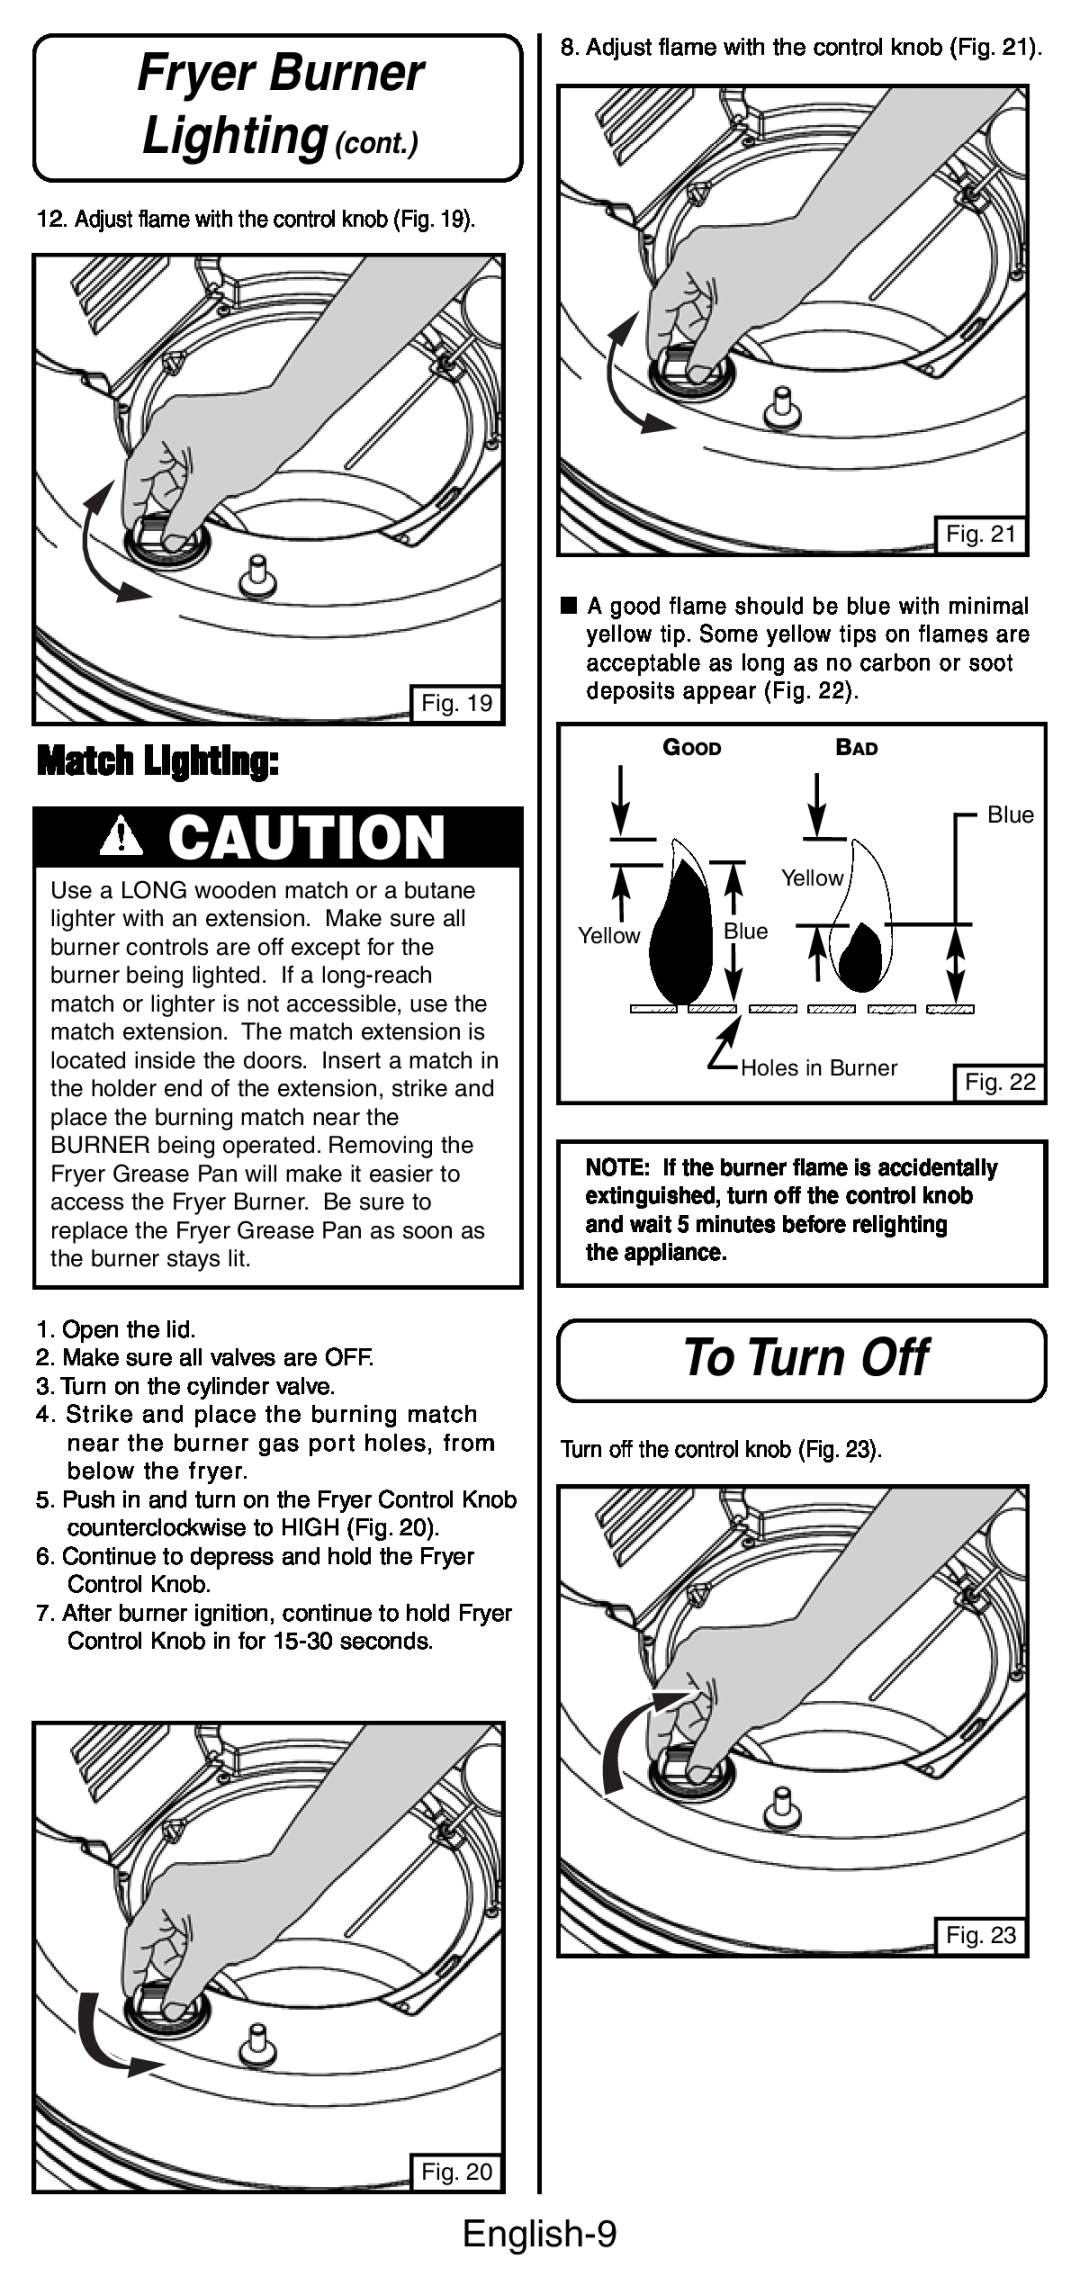 Coleman 9994 instruction manual Fryer Burner Lighting cont, To Turn Off, Match Lighting, English-9 